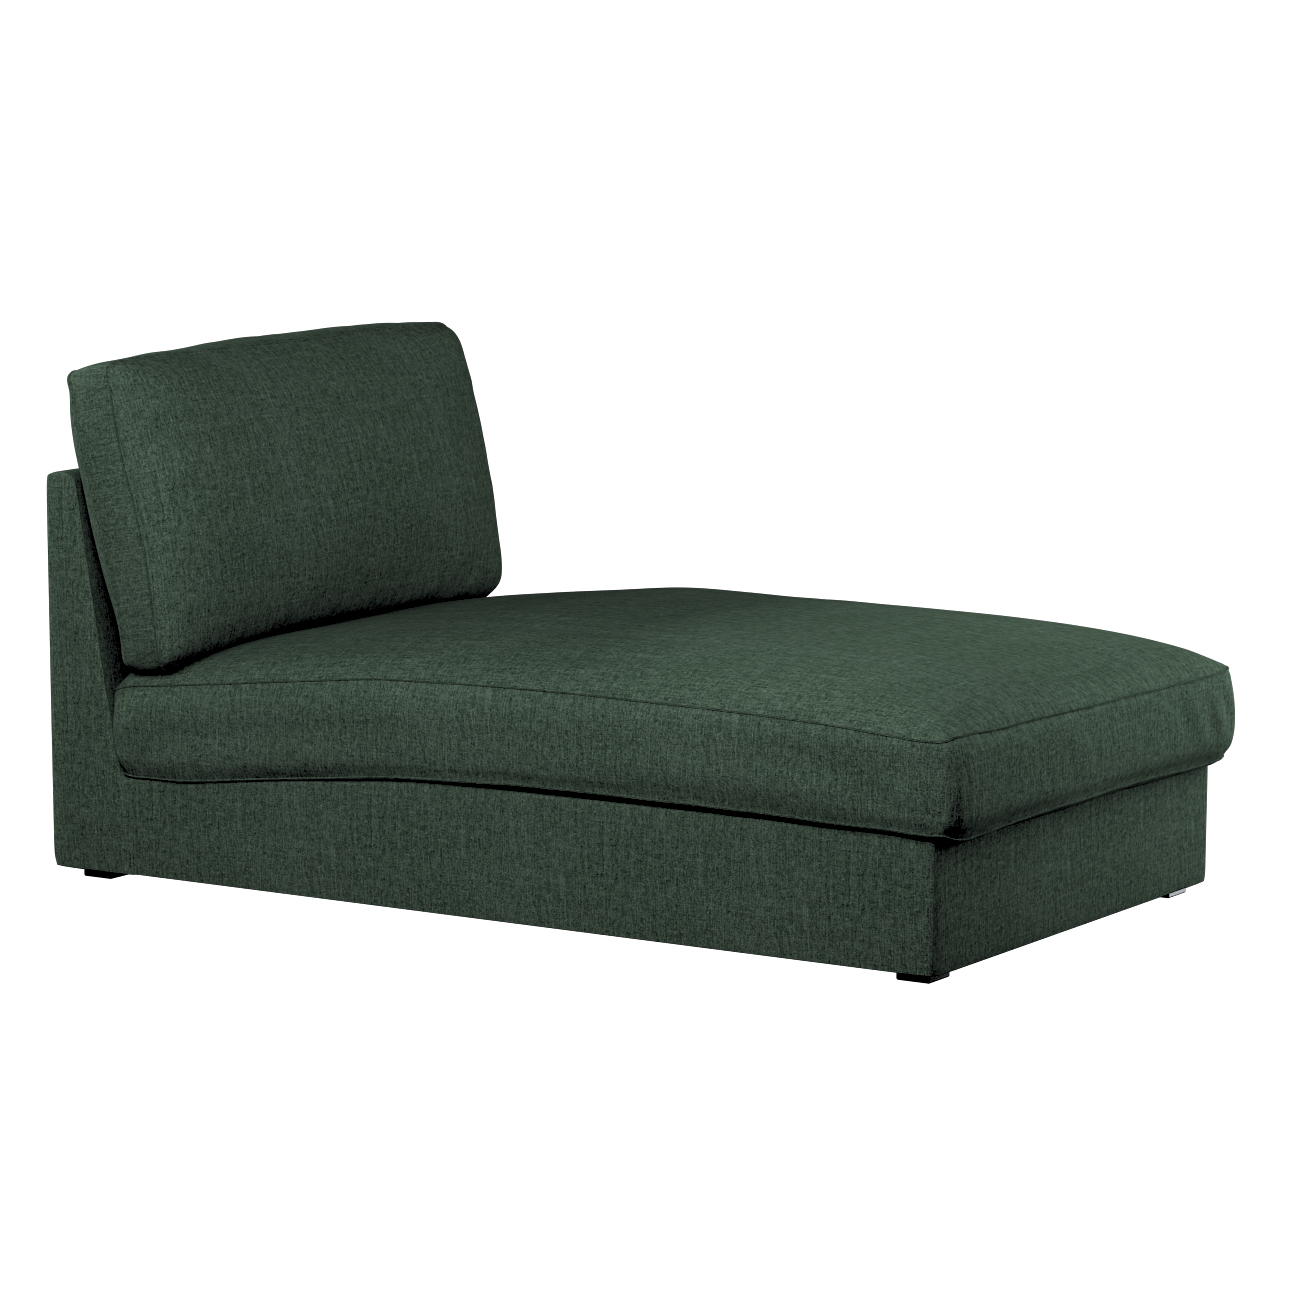 Bezug für Kivik Recamiere Sofa, dunkelgrün, Bezug für Kivik Recamiere, City günstig online kaufen